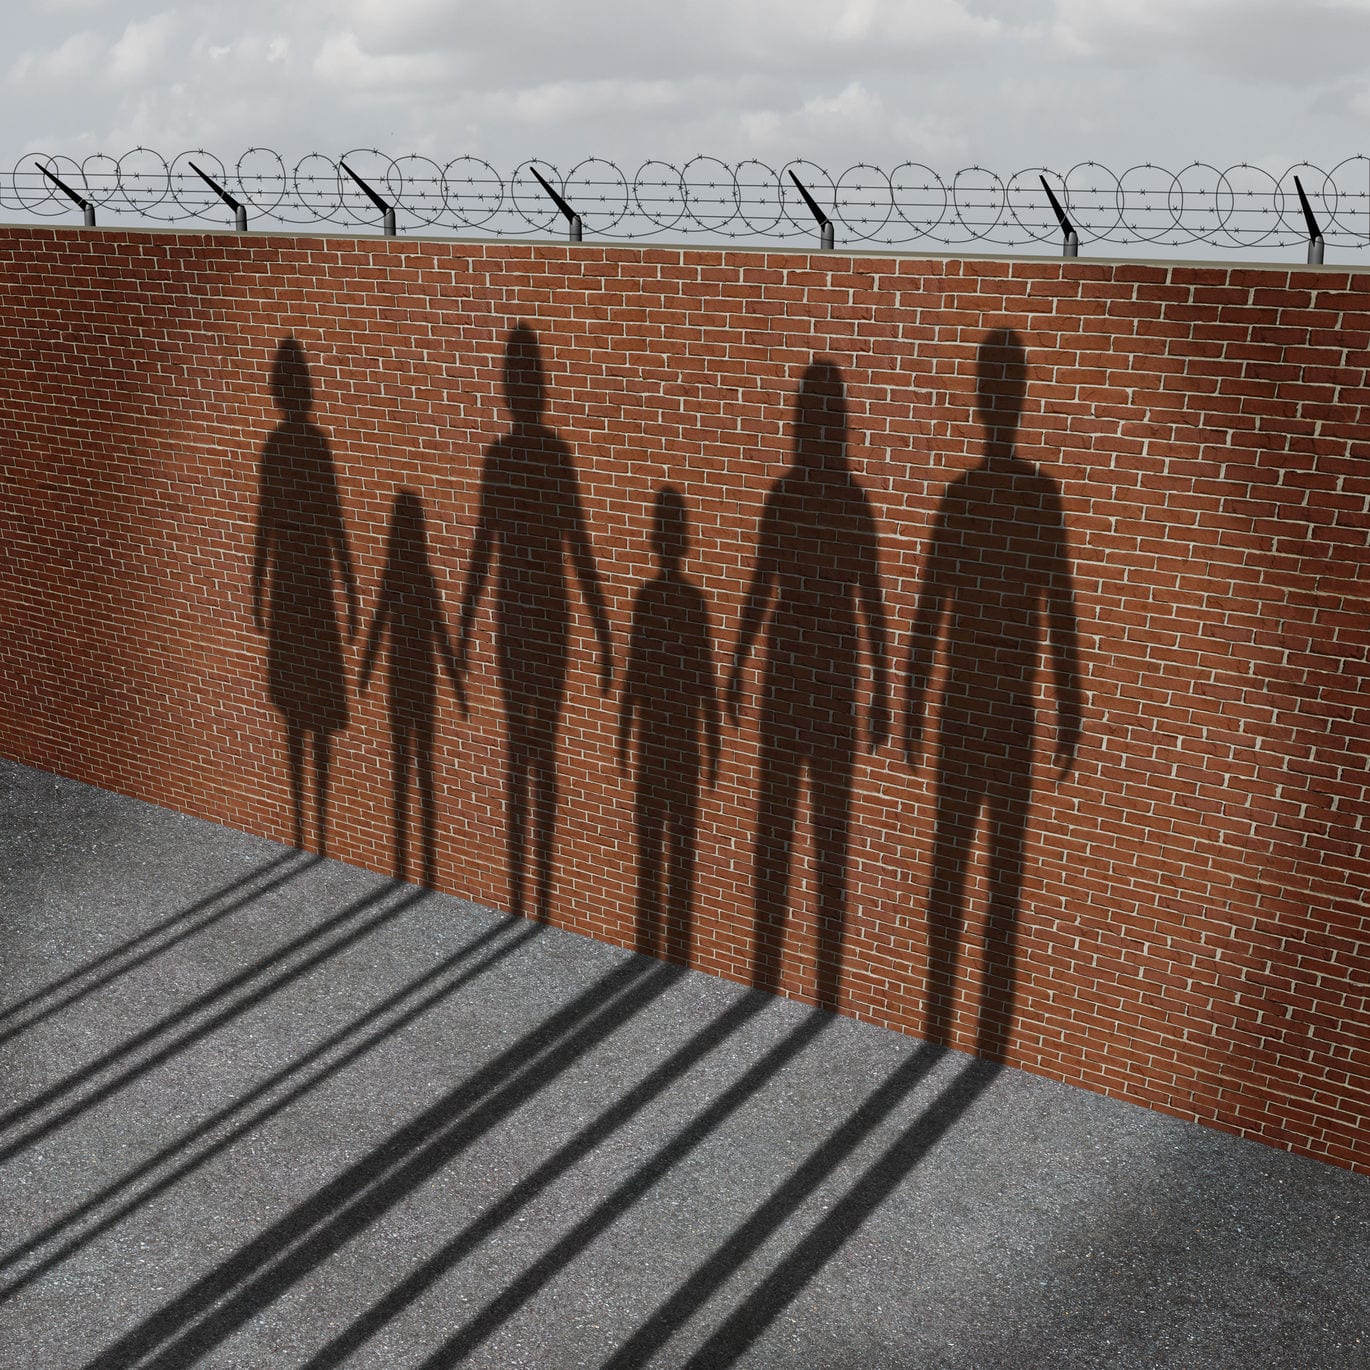 U.S. Immigration Enforcement: The New Fugitive Slave Act?